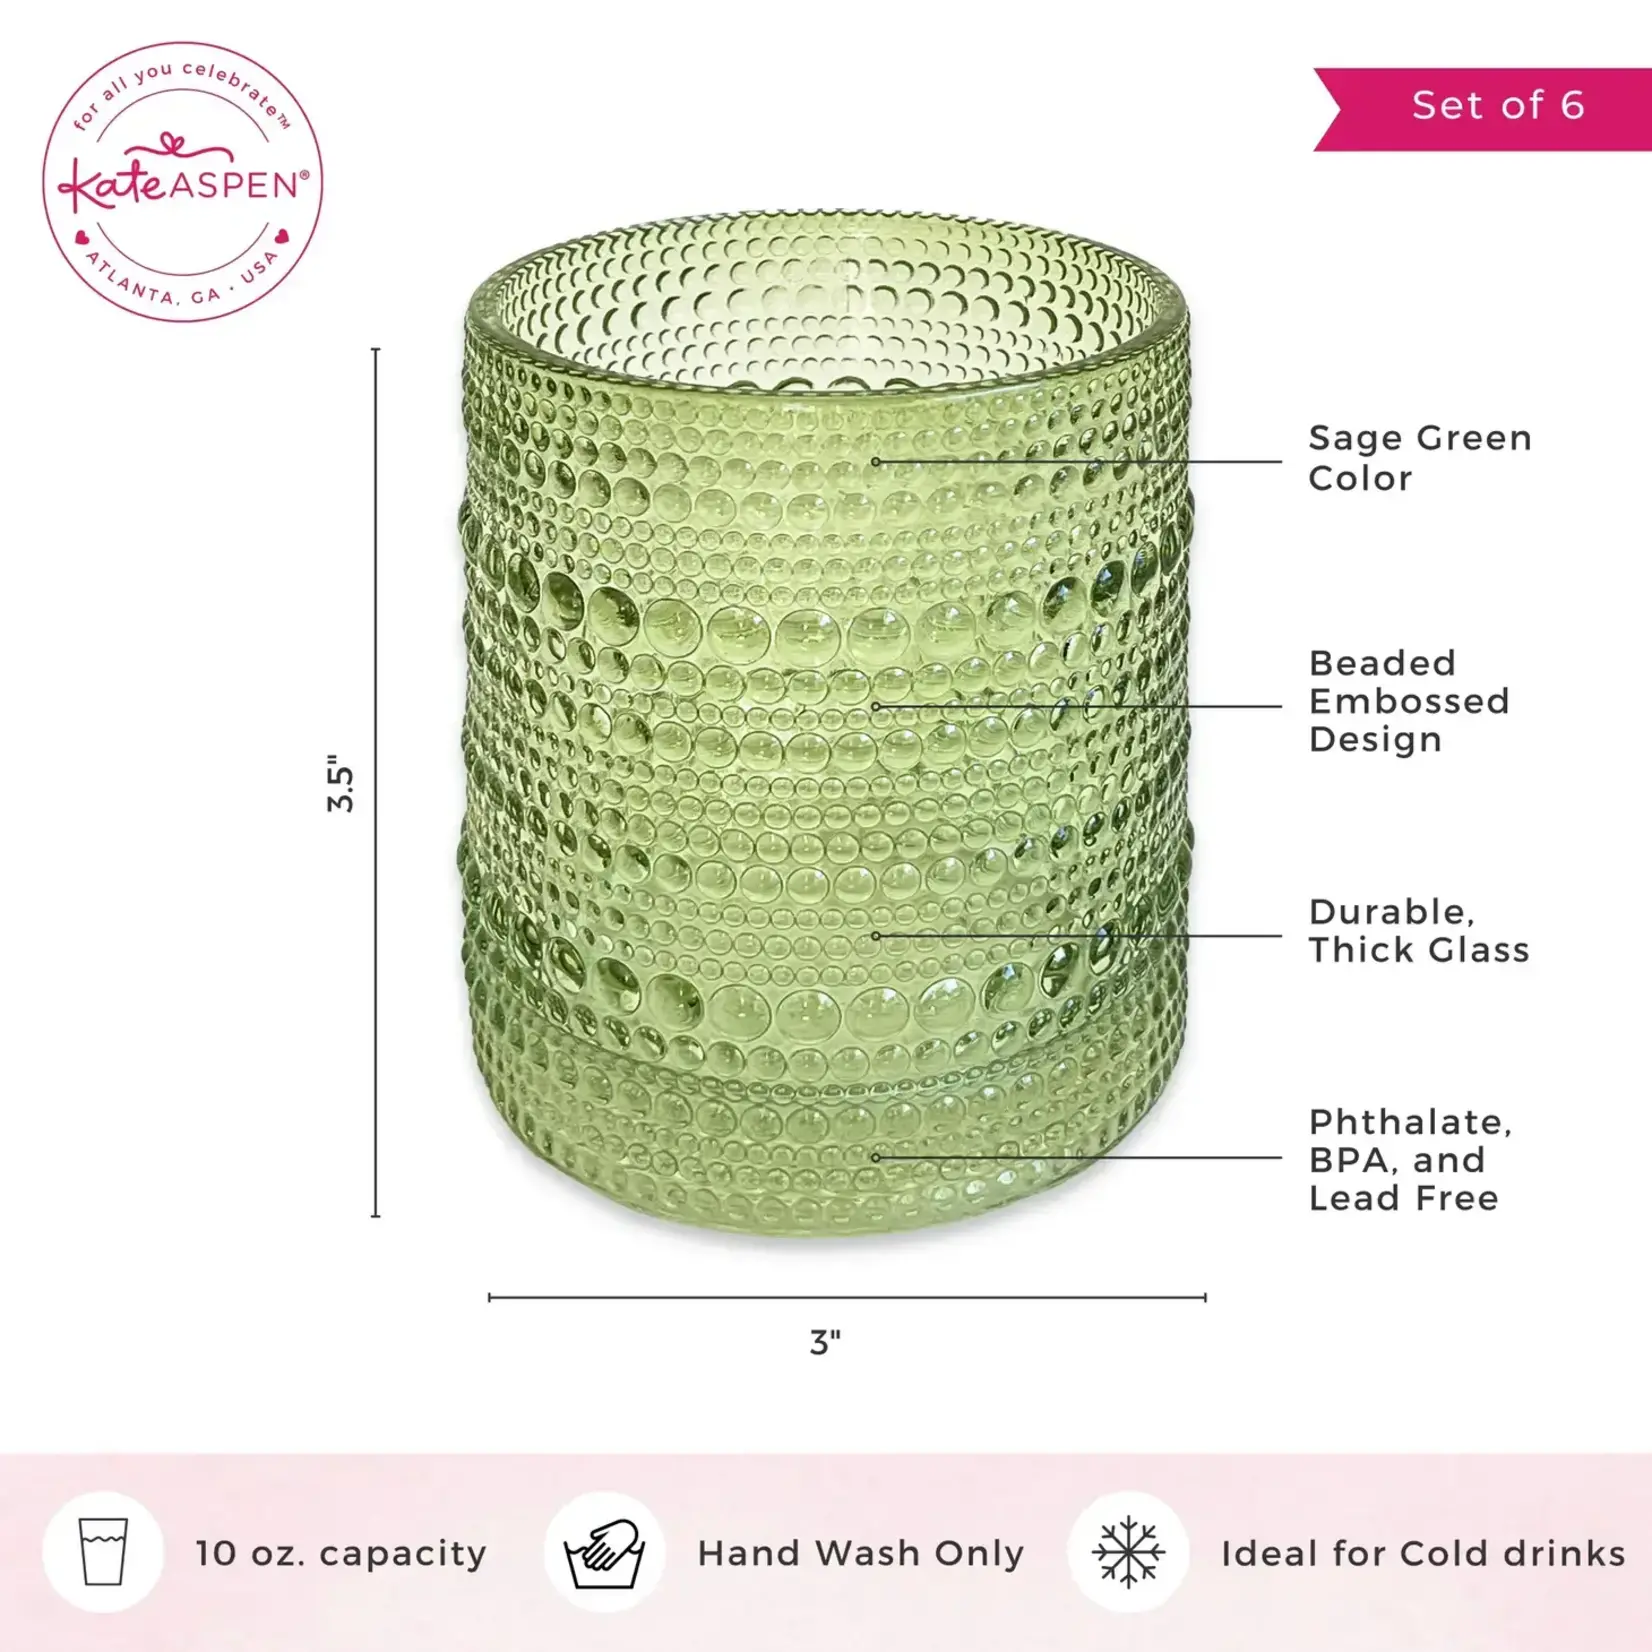 Kate Aspen 10 oz. Textured Beaded Sage Green Drinking Glass